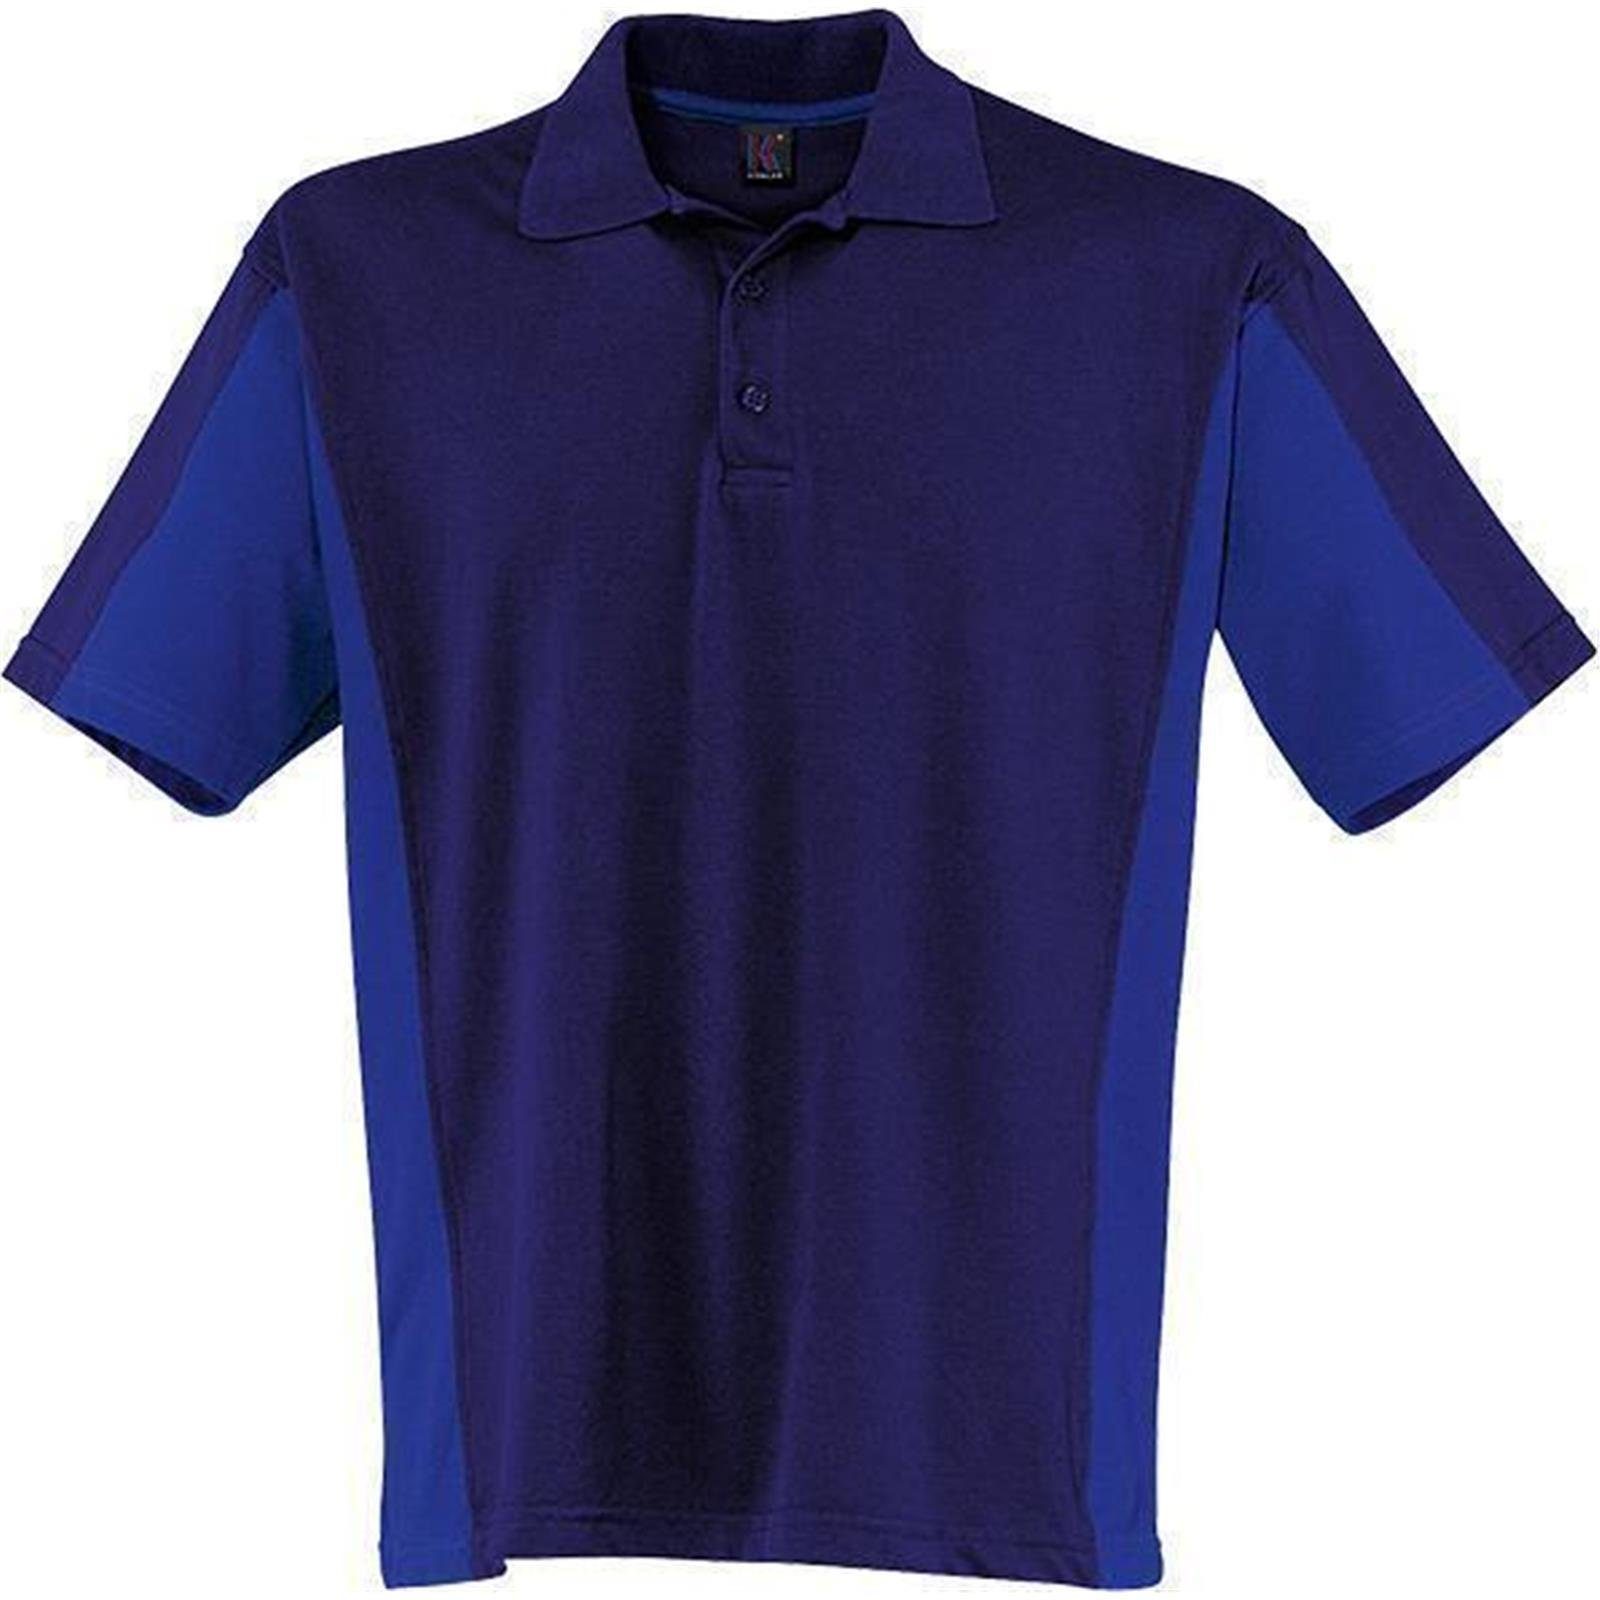 Kübler T-Shirt Kübler Polo-Shirt Shirt-Dress dunkelblau/blau